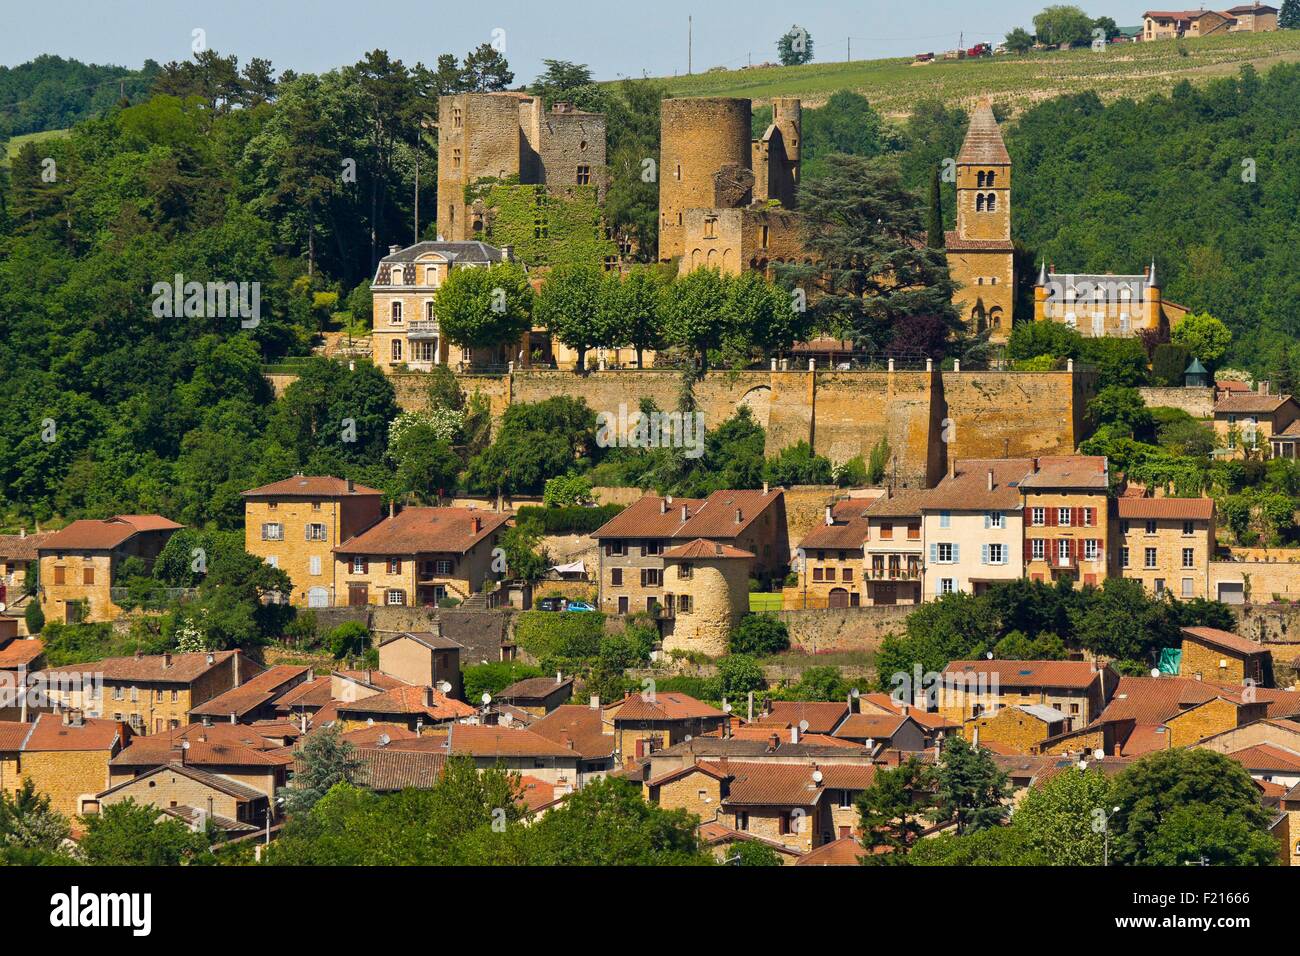 France, Rhone, Beaujolais region, Gilded Stones area, village of Chatillon d'Azergues Stock Photo